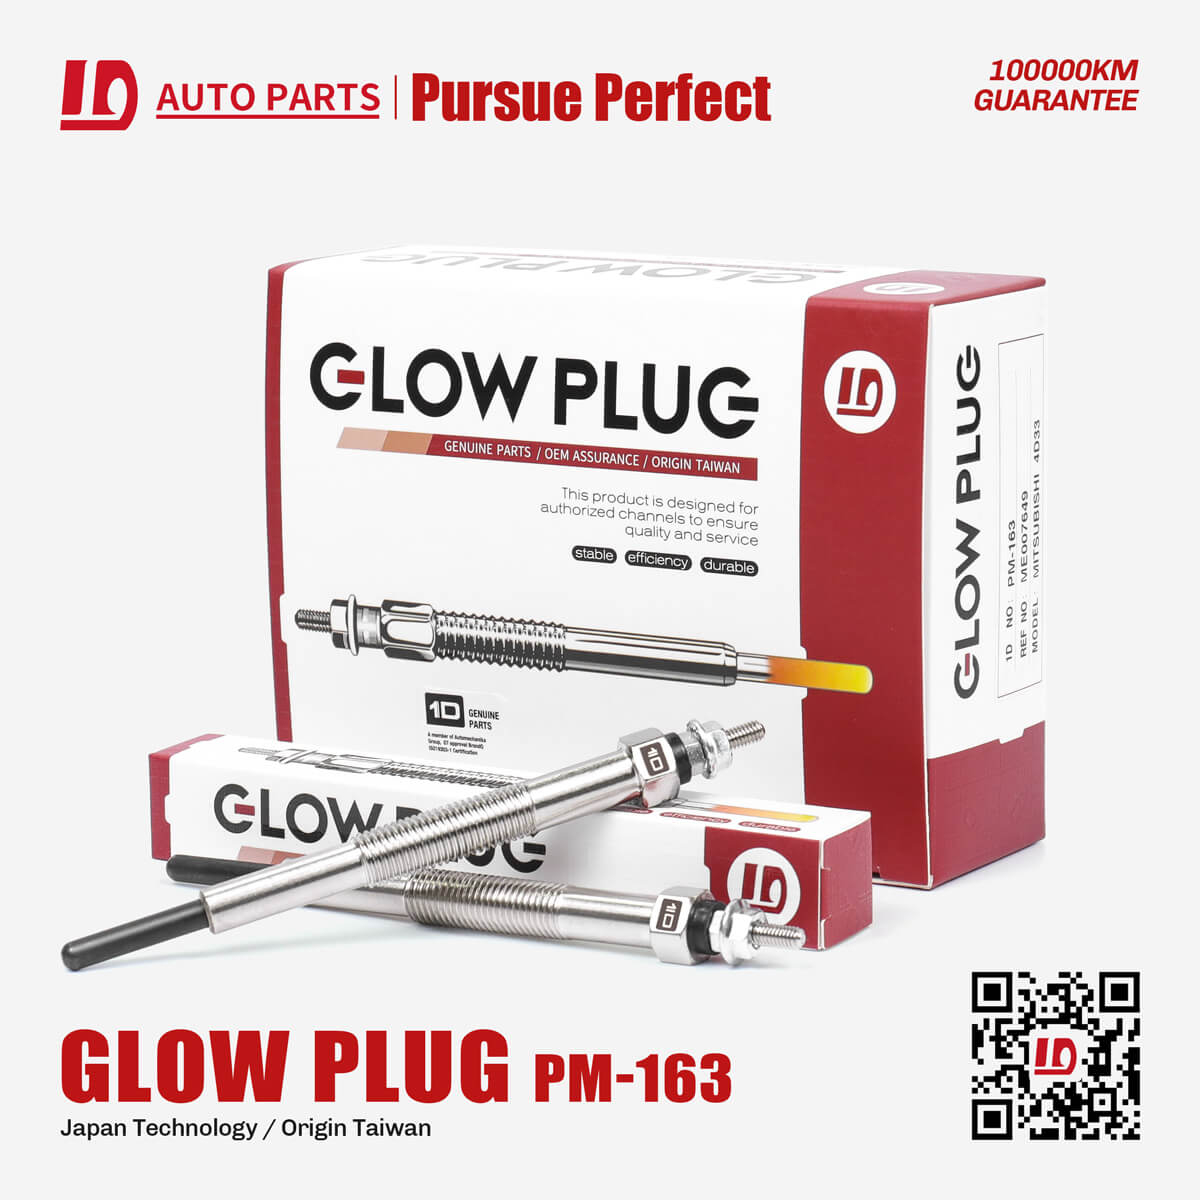 PM-163 ME007649 1D Glow plugs For Japan engine spare parts 4D33 10 pcs in a box/piece